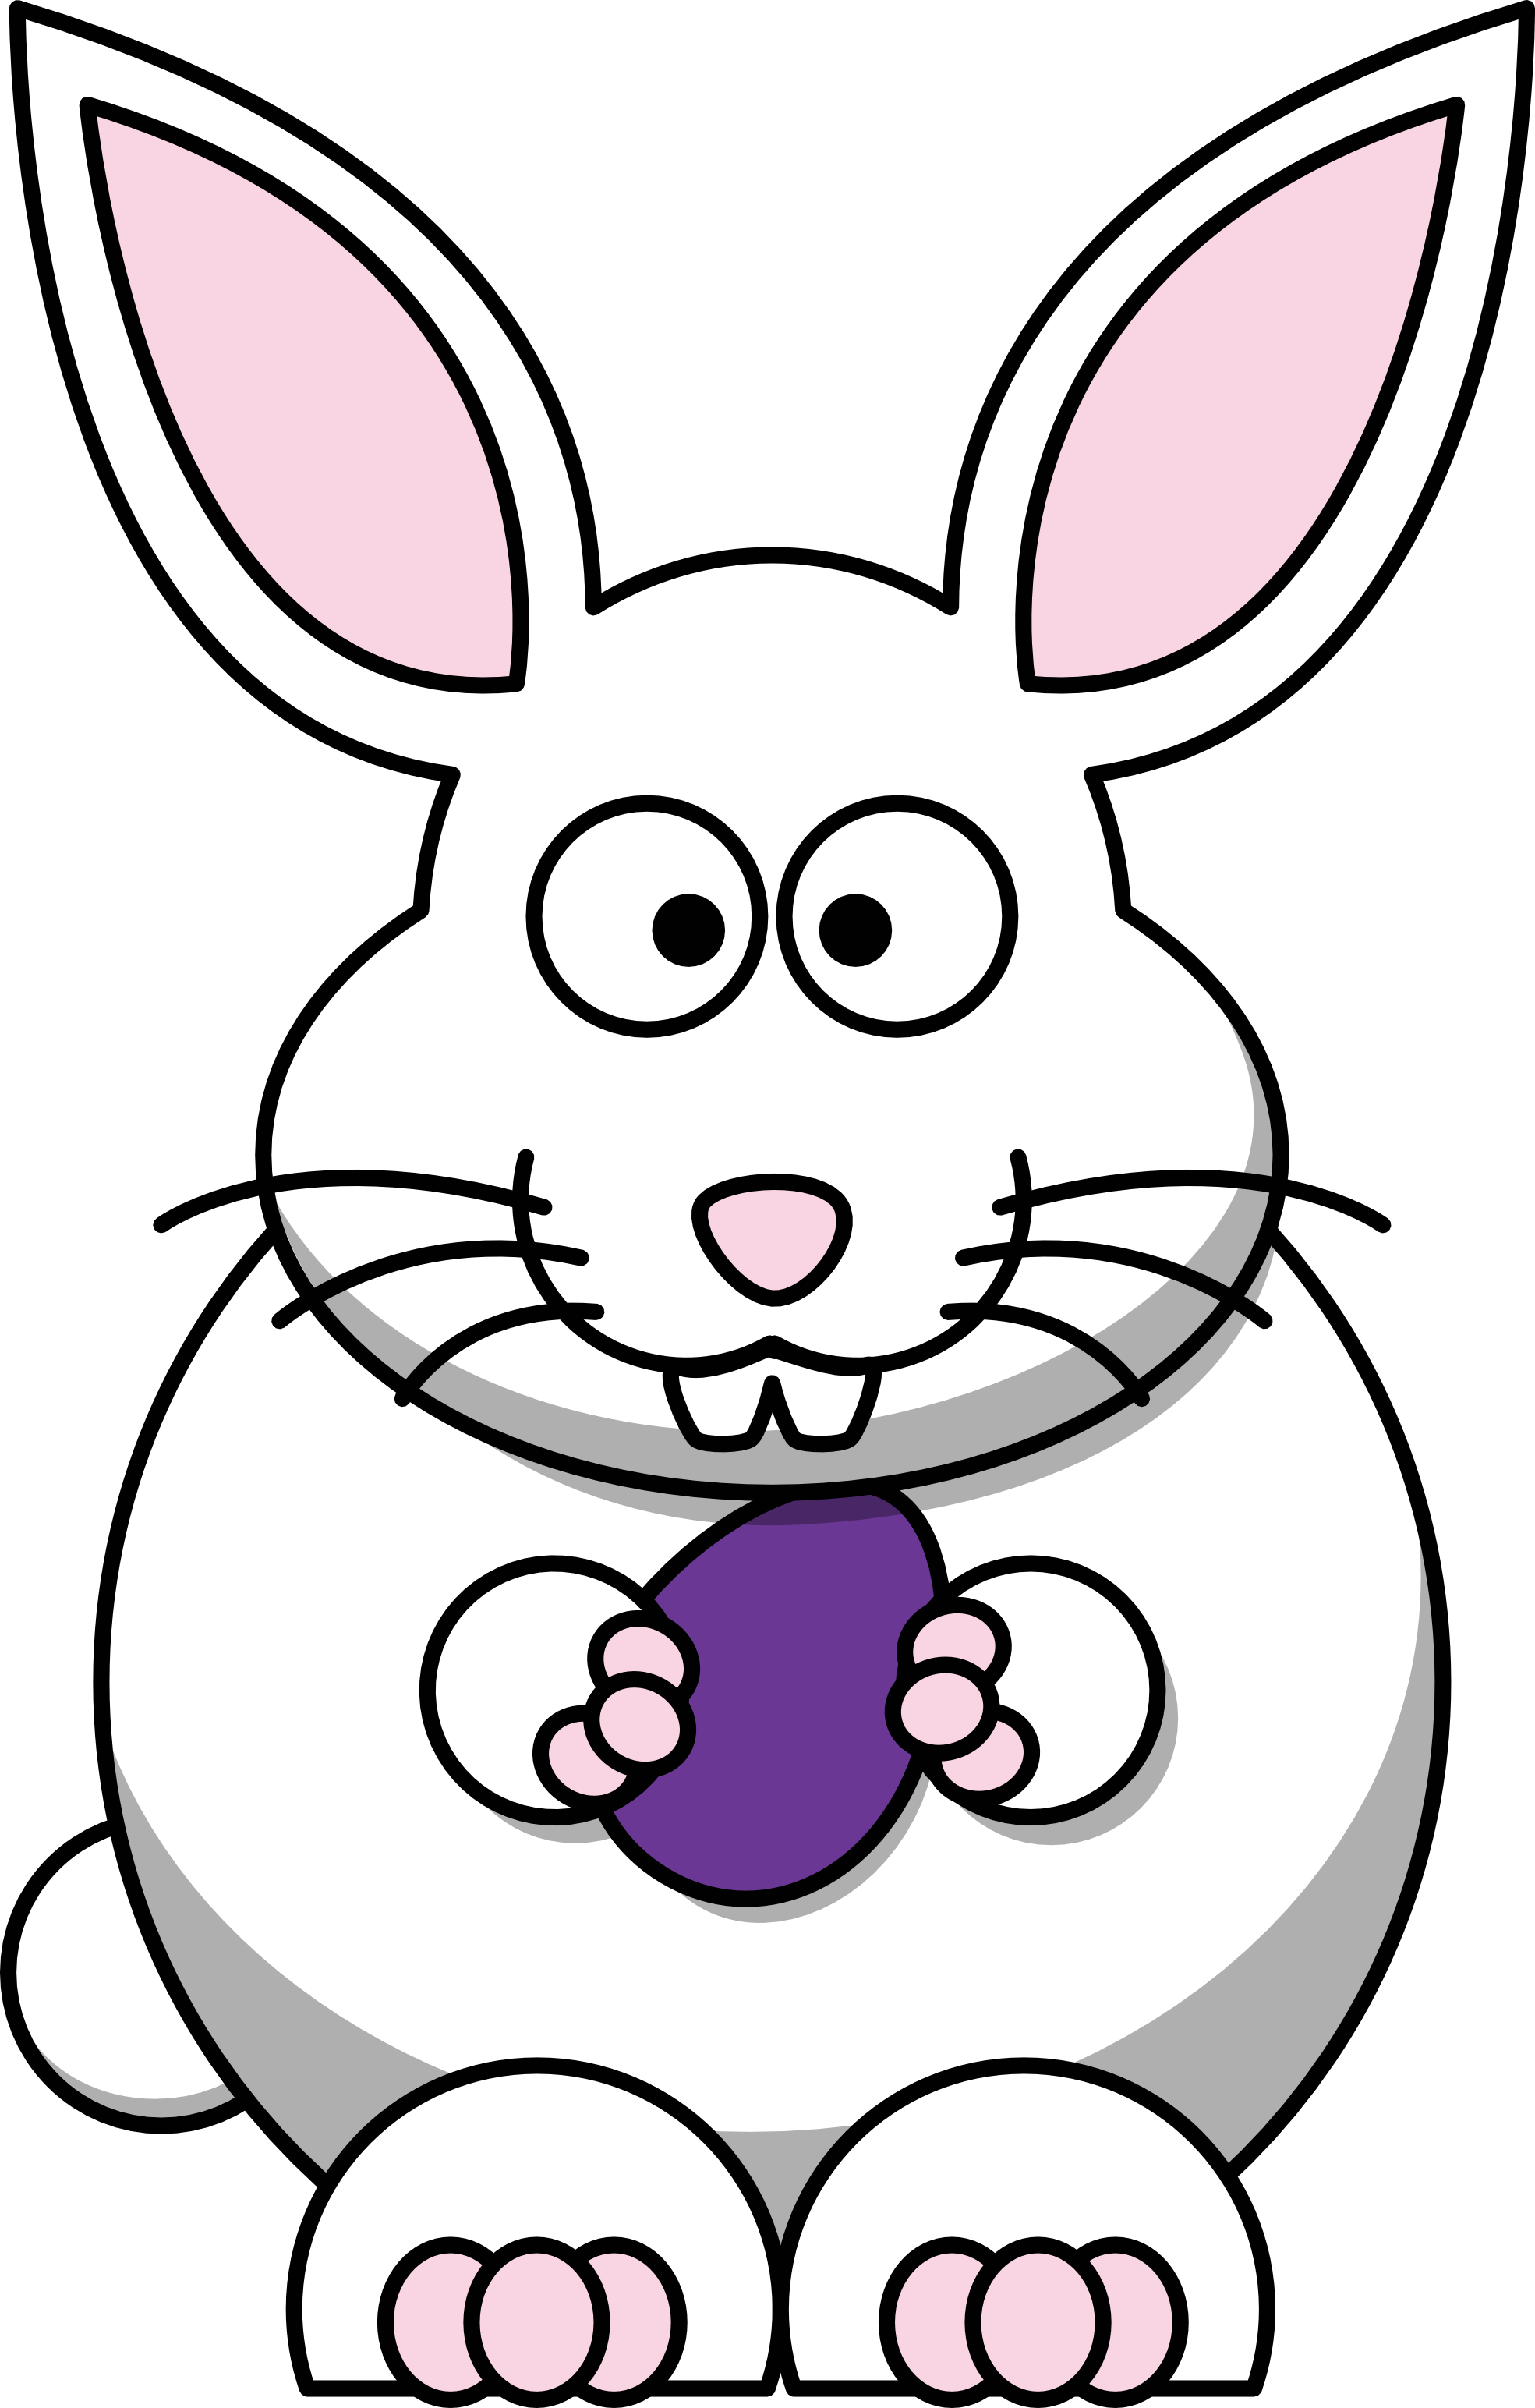 Bunnies clipart cartoon. Free bunny images download